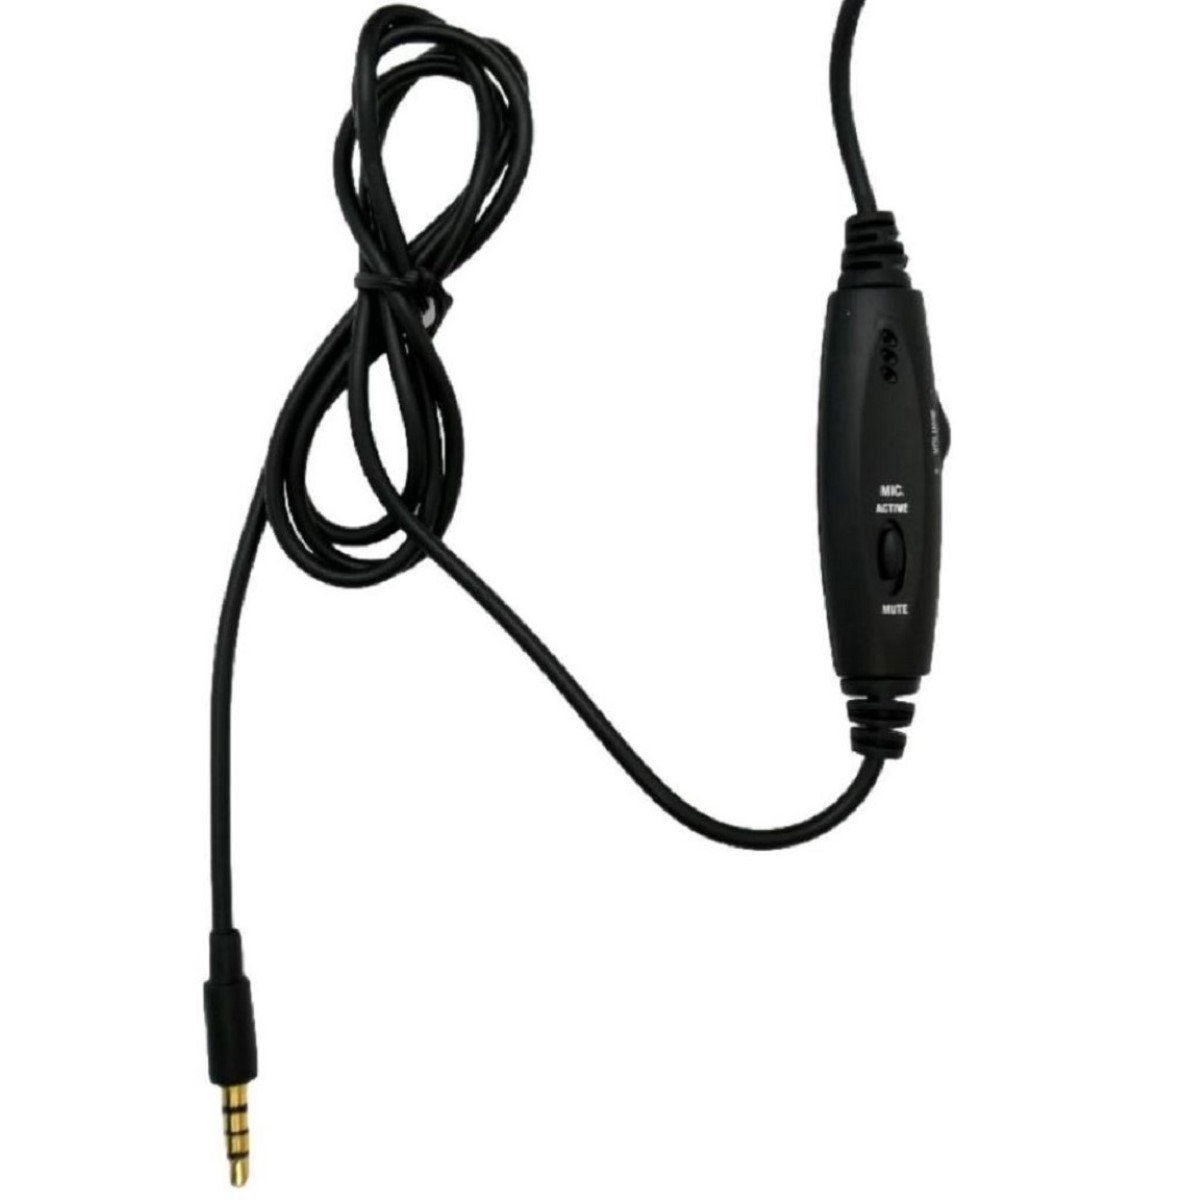 Speedlink Headset Headset auch passend + Kabelfernbedienung Handy X/S Kopfhörer Mikrofon-Stummschaltung, PS5 für Hifi) BAZZ (Integrierte PS4 MP3 Stereo, 3,5mm Mikrofon One, Series Over-Ear Klinke Lautstärkeregeler, mit Xbox